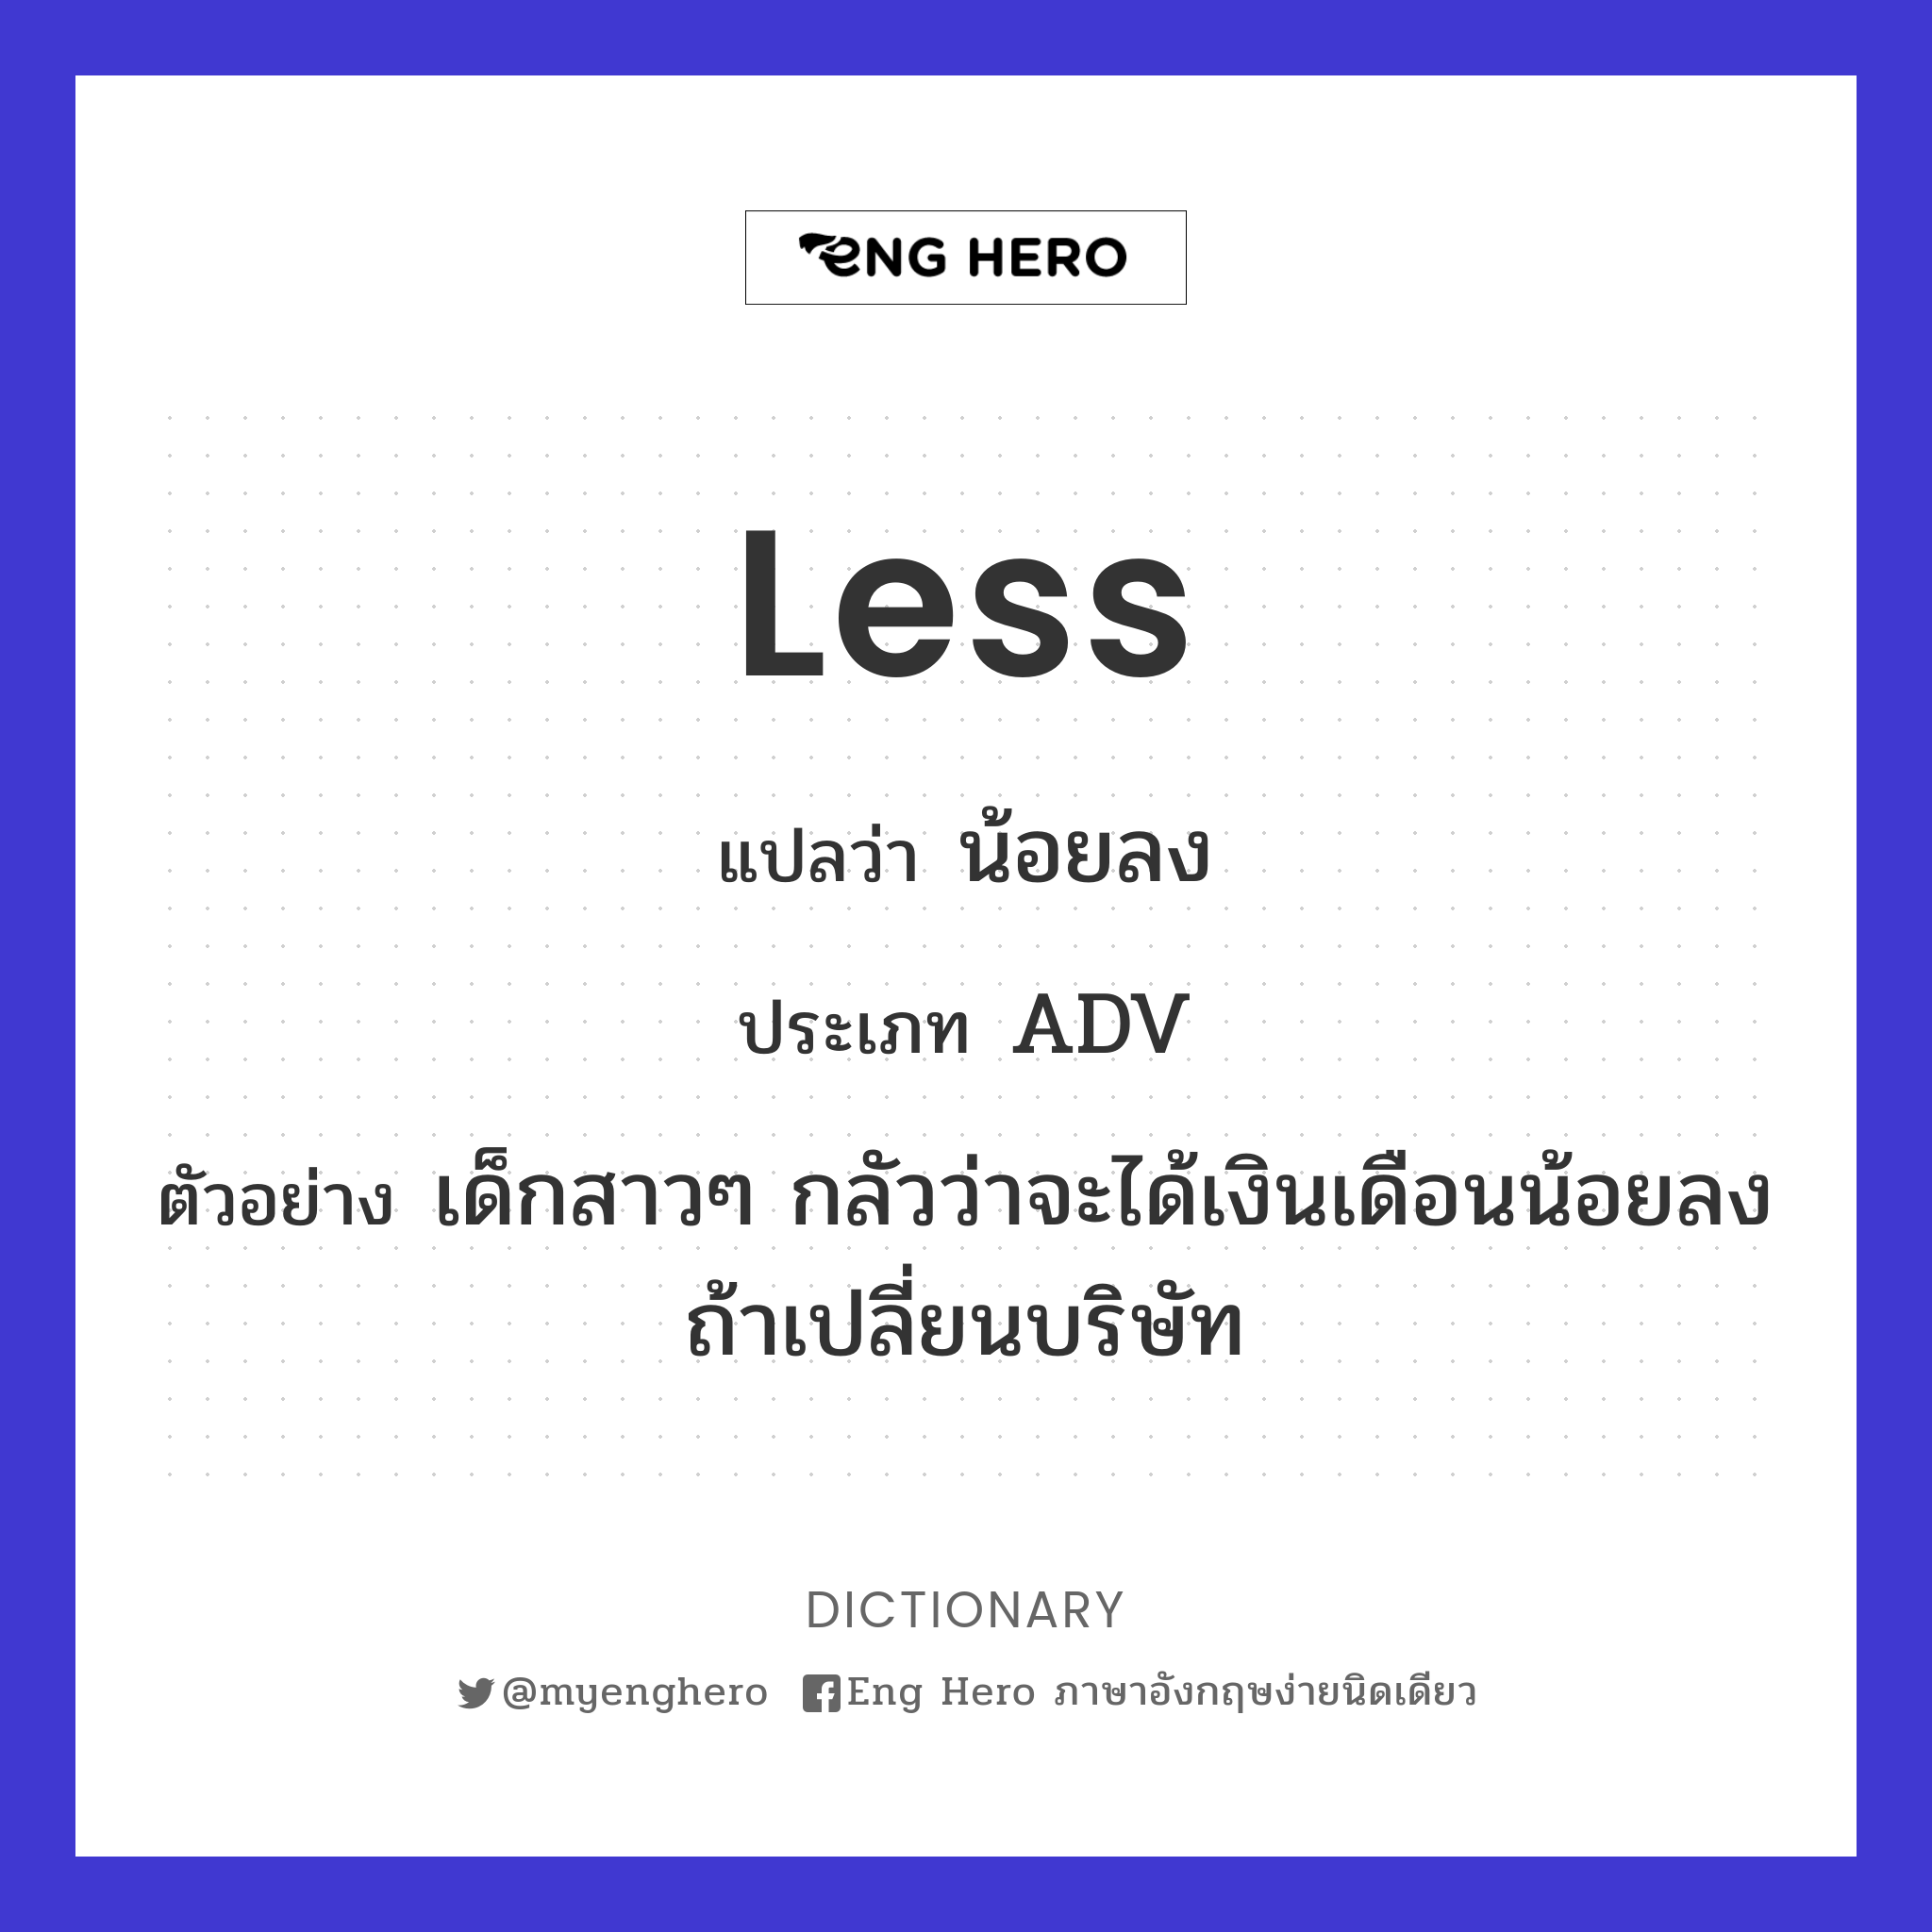 less